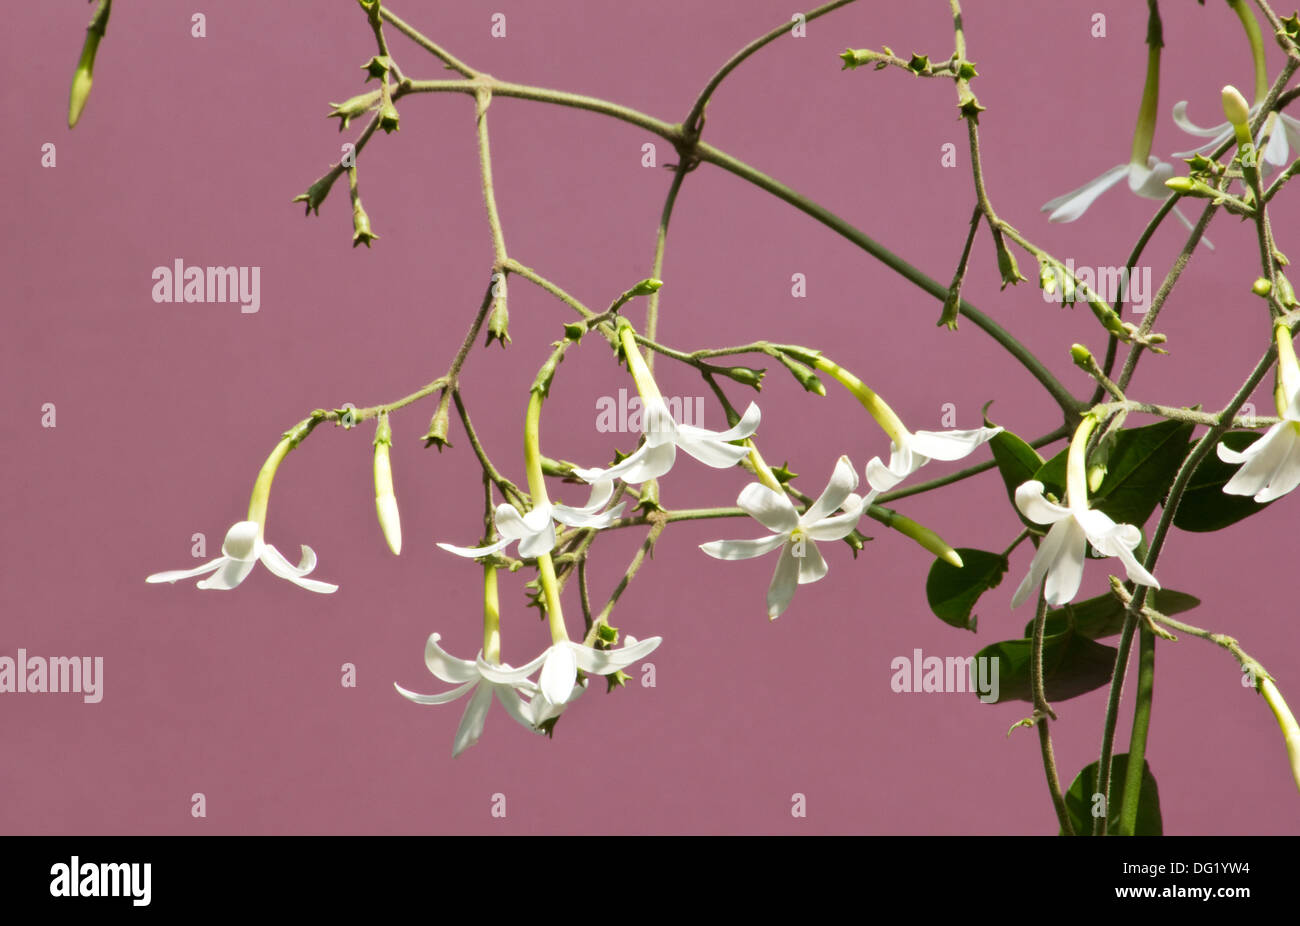 Azores jasmine plant and flowers (Jasminum azoricum) with pink background Stock Photo